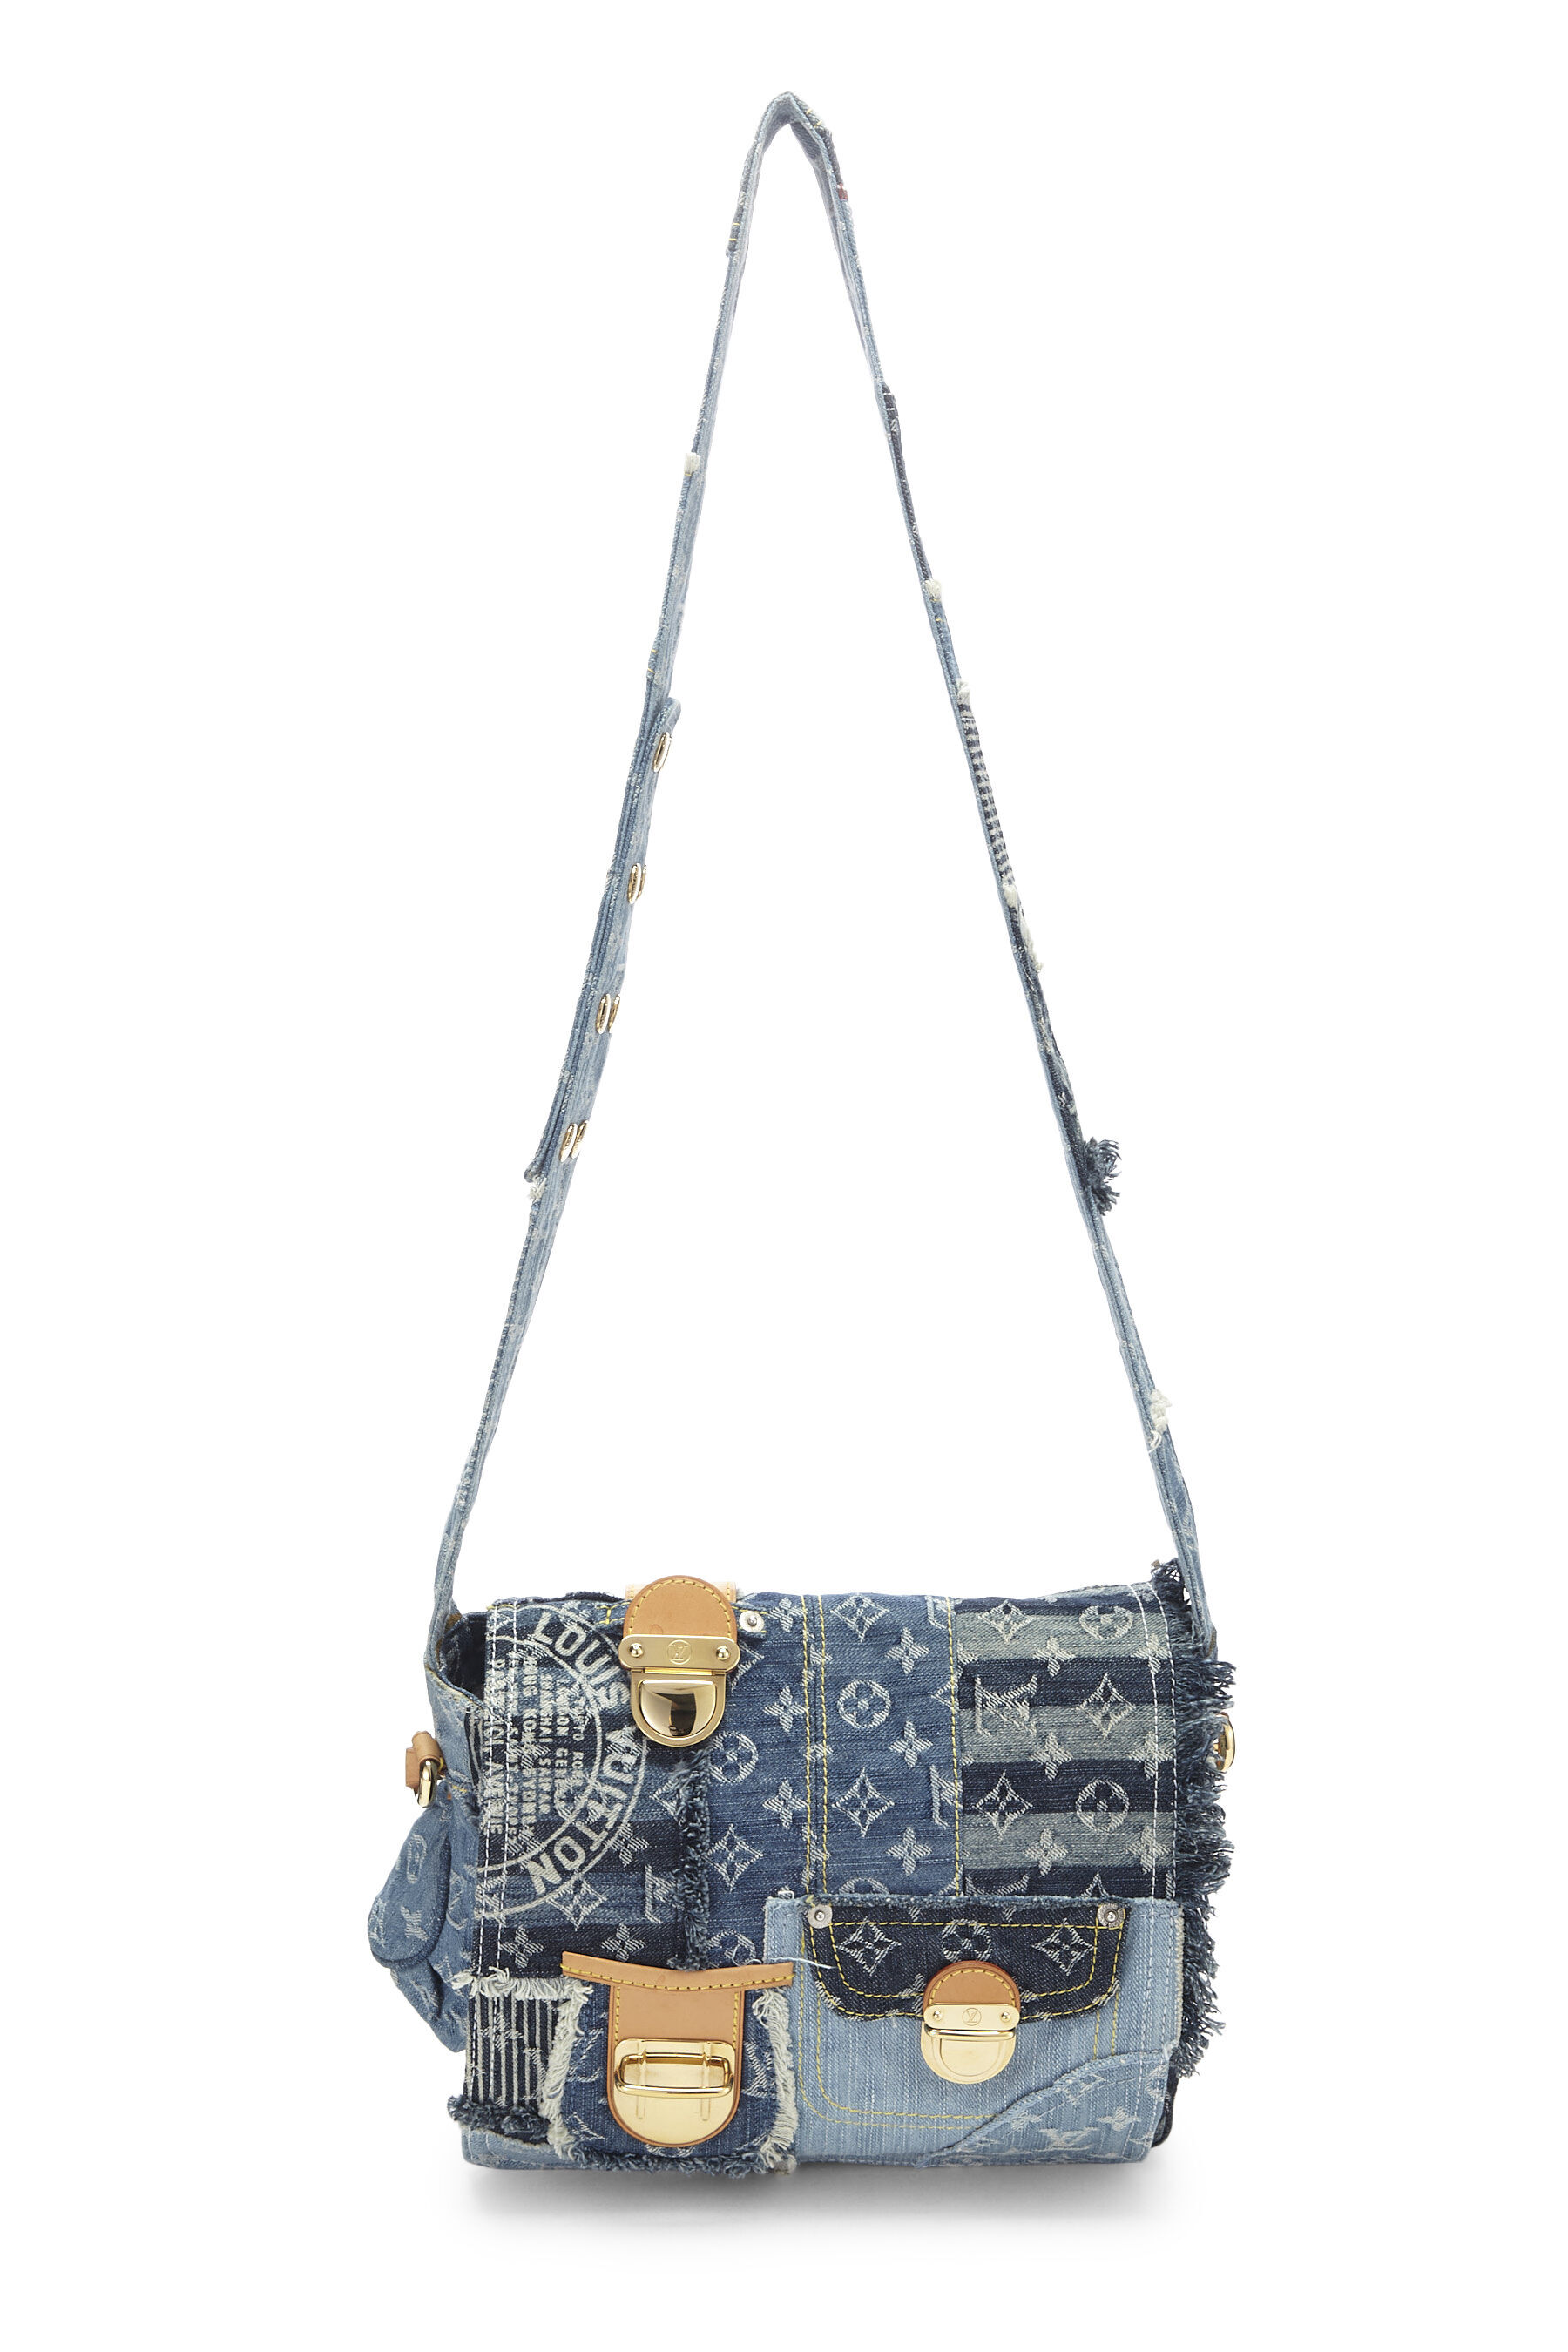 Blue Jean Purses Sale | Denim Shoulder Bag Purse | Large Denim Shoulder Bag  - Fashion - Aliexpress